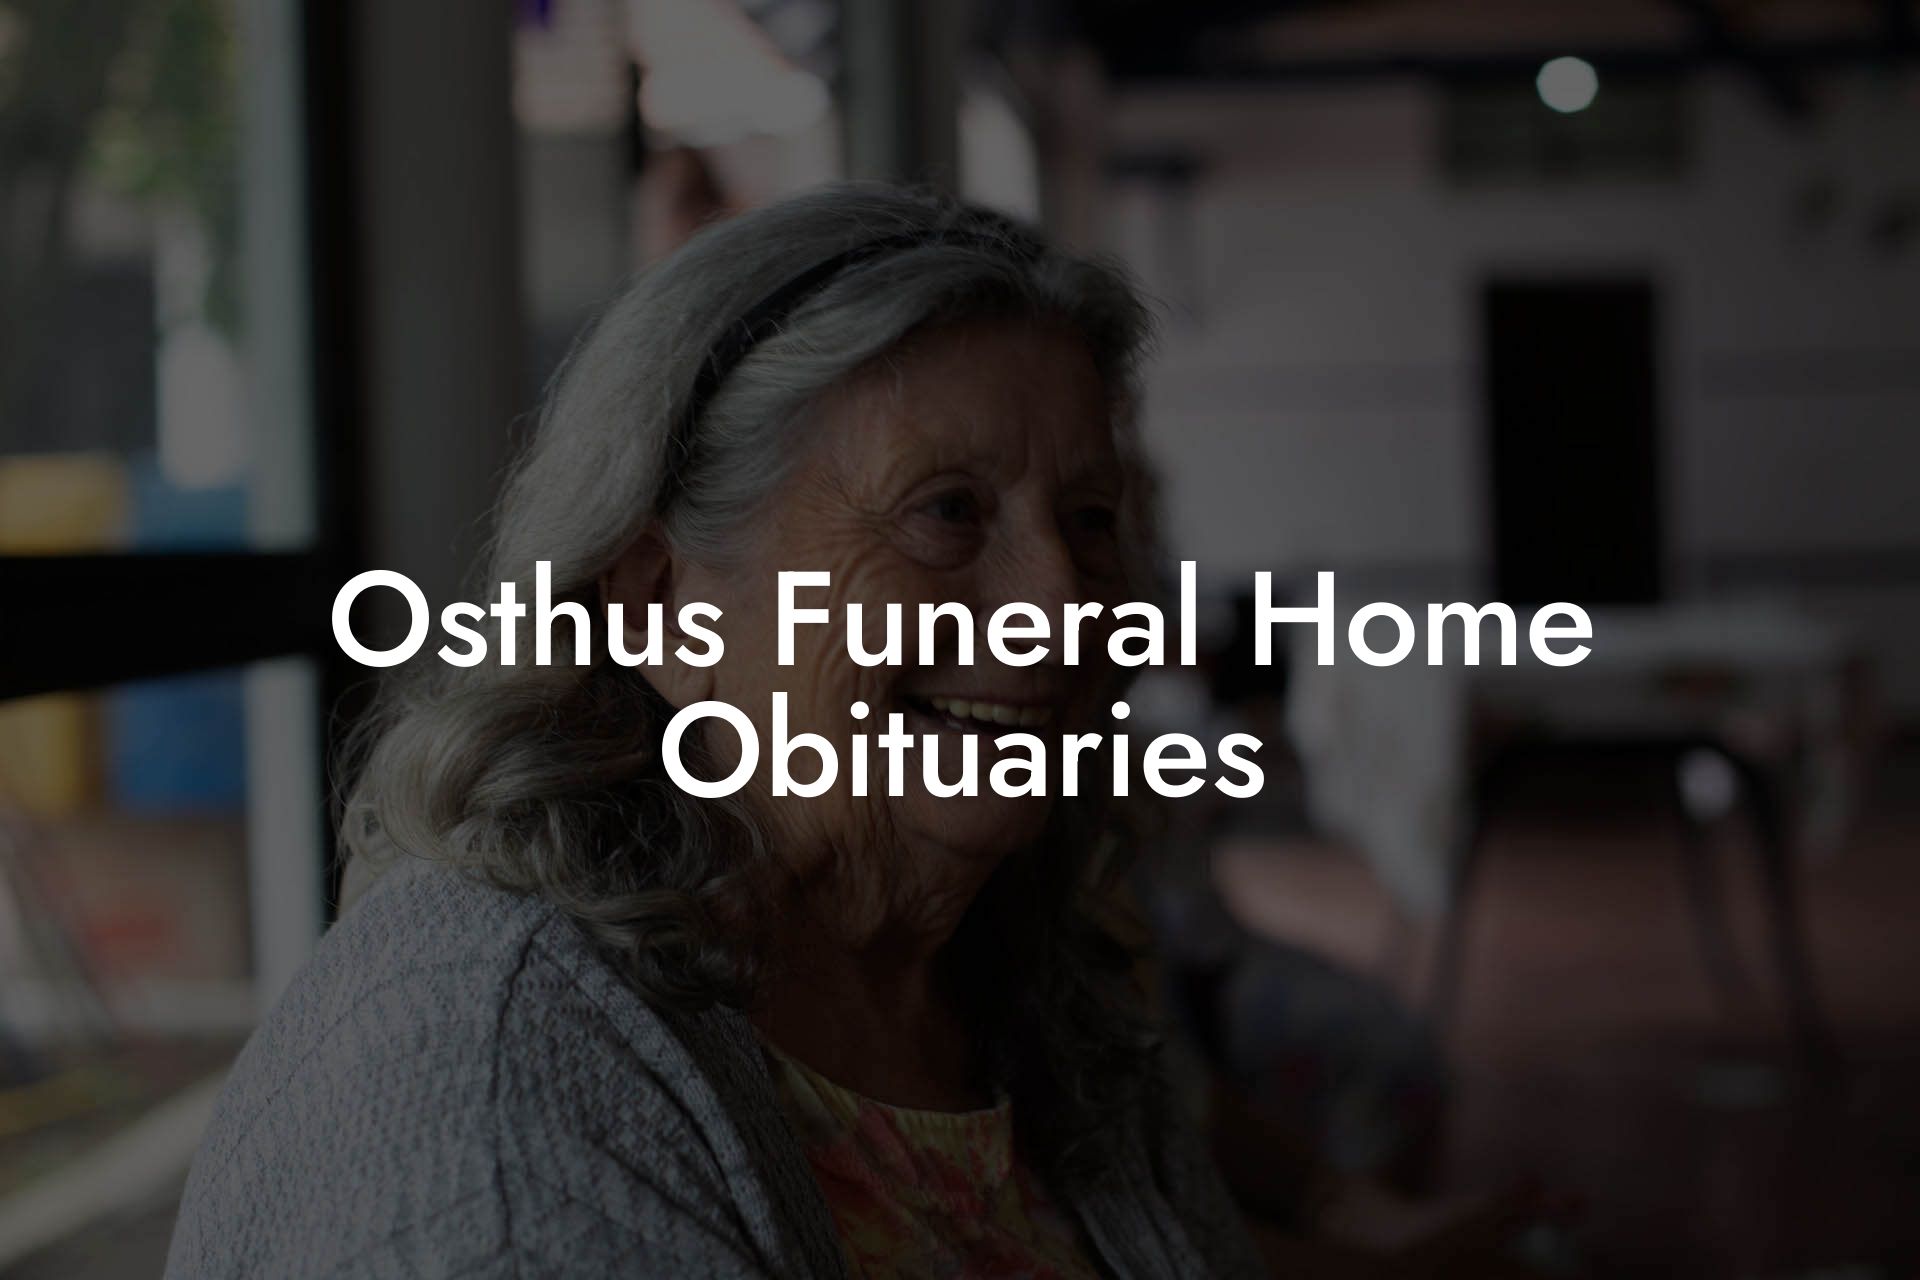 Osthus Funeral Home Obituaries